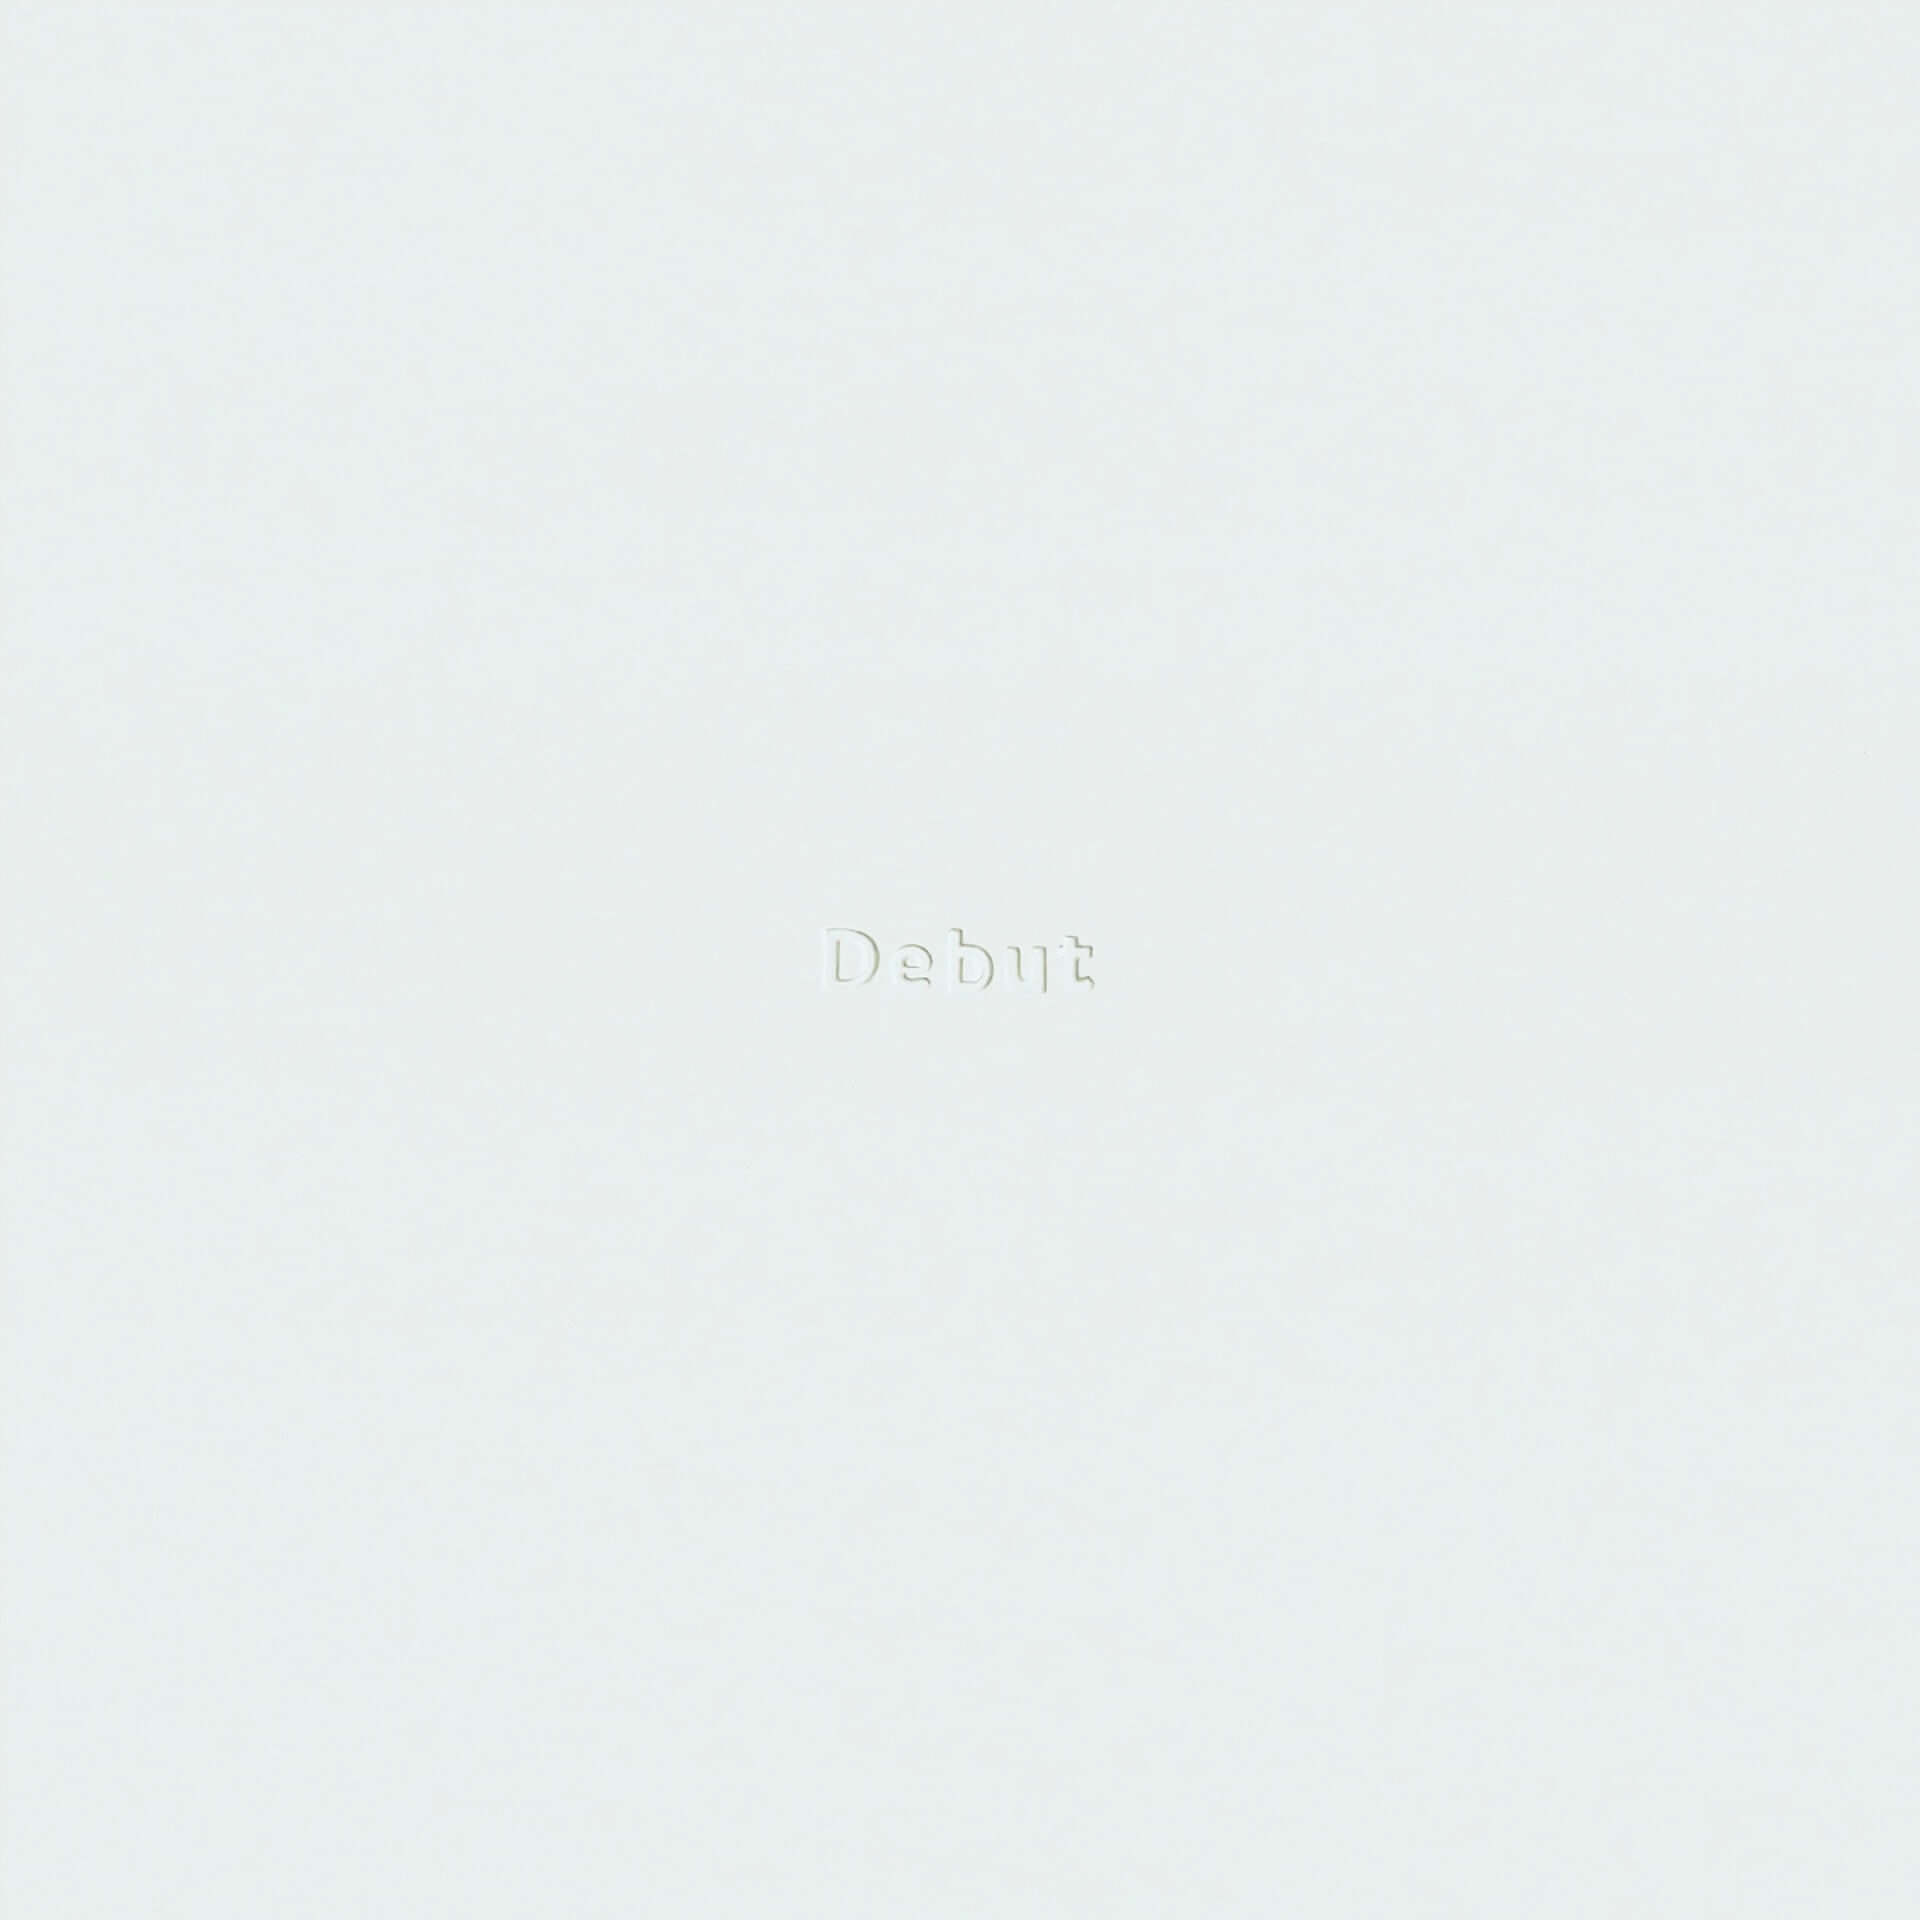 Ryohuの1stアルバム『DEBUT』リリース記念ライブにAAAMYYY、TENDRE、Shin Sakiuraが出演決定！フリーチケットは申し込み受付中 music201120_ryohu_5-1920x1920